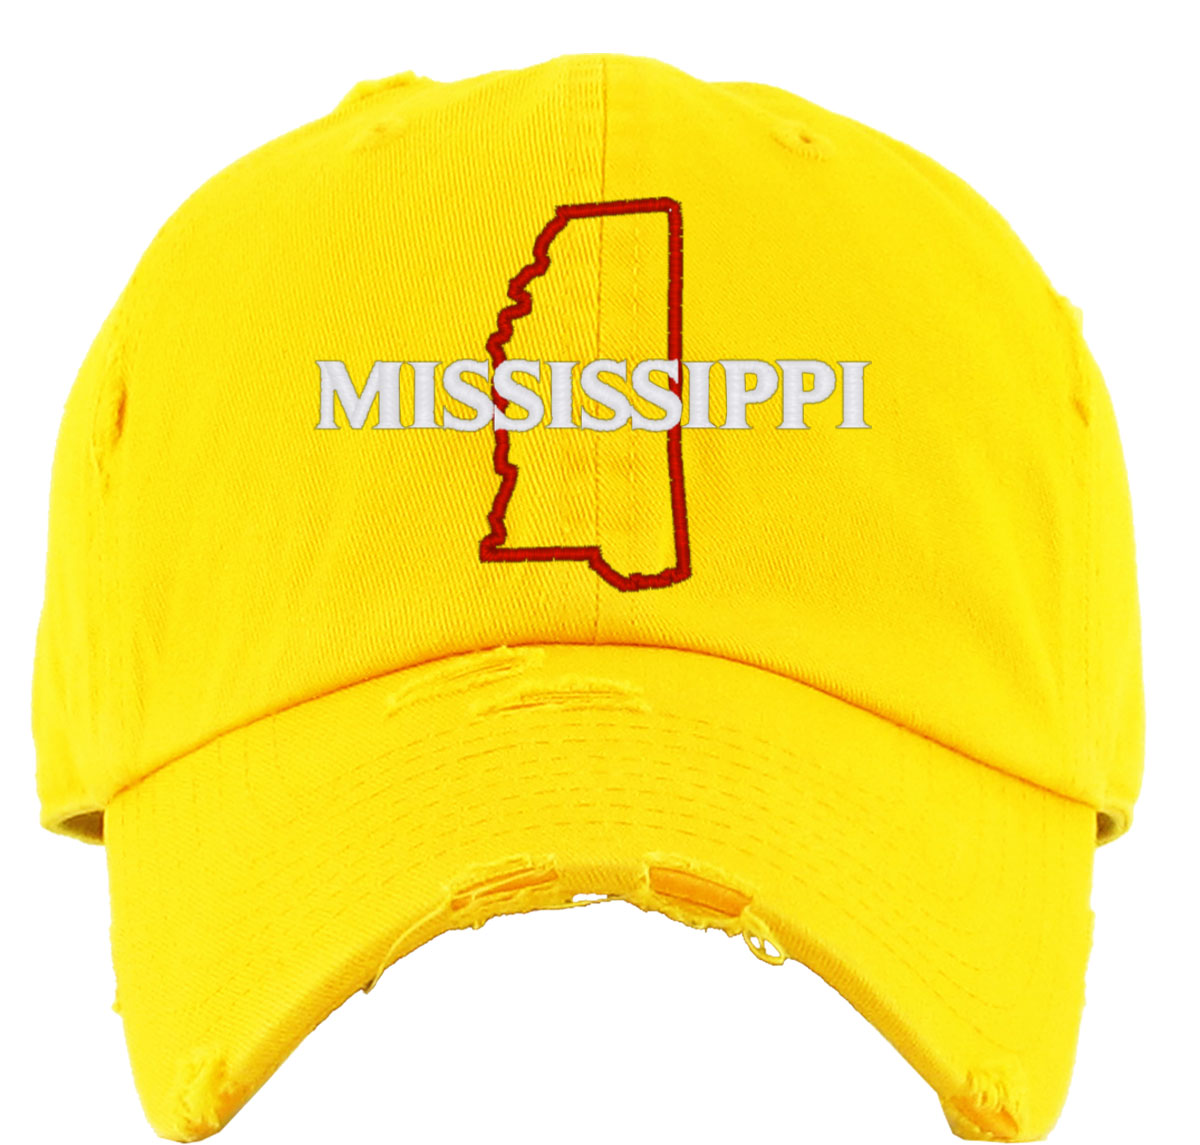 Mississippi Vintage Baseball Cap